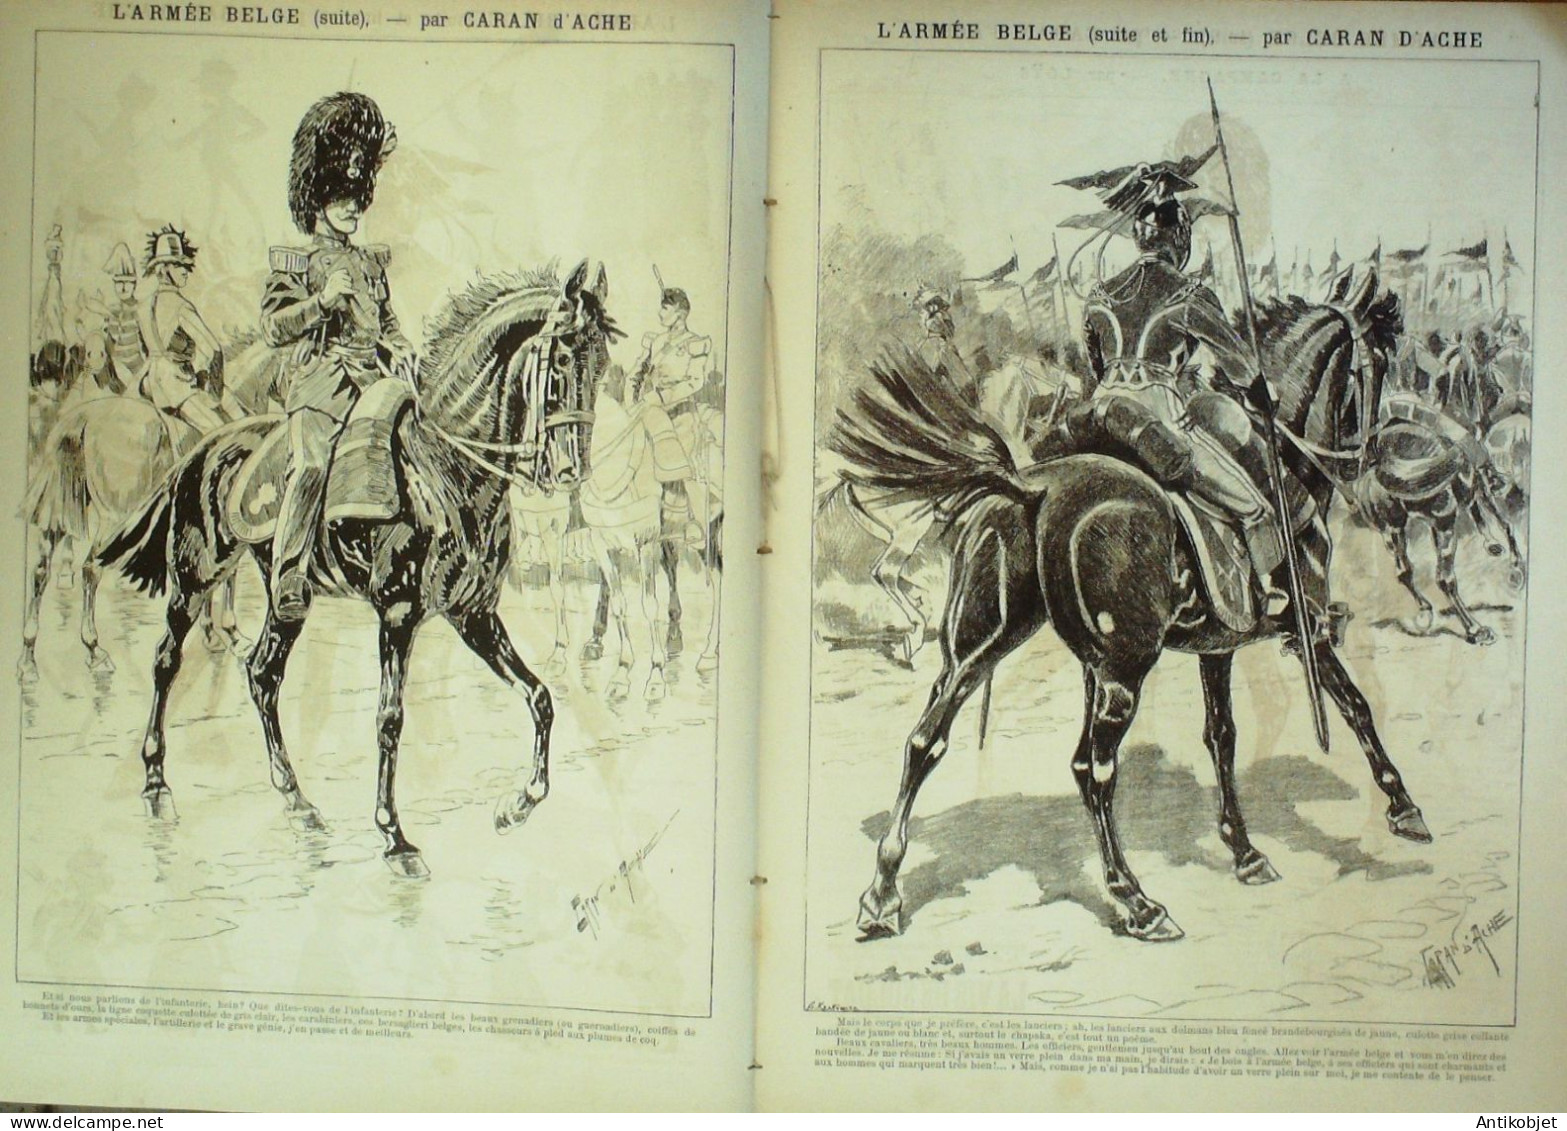 La Caricature 1886 N°328 Armée Belge Caran D'Ache Joséphine Sorel Loys Trock - Zeitschriften - Vor 1900